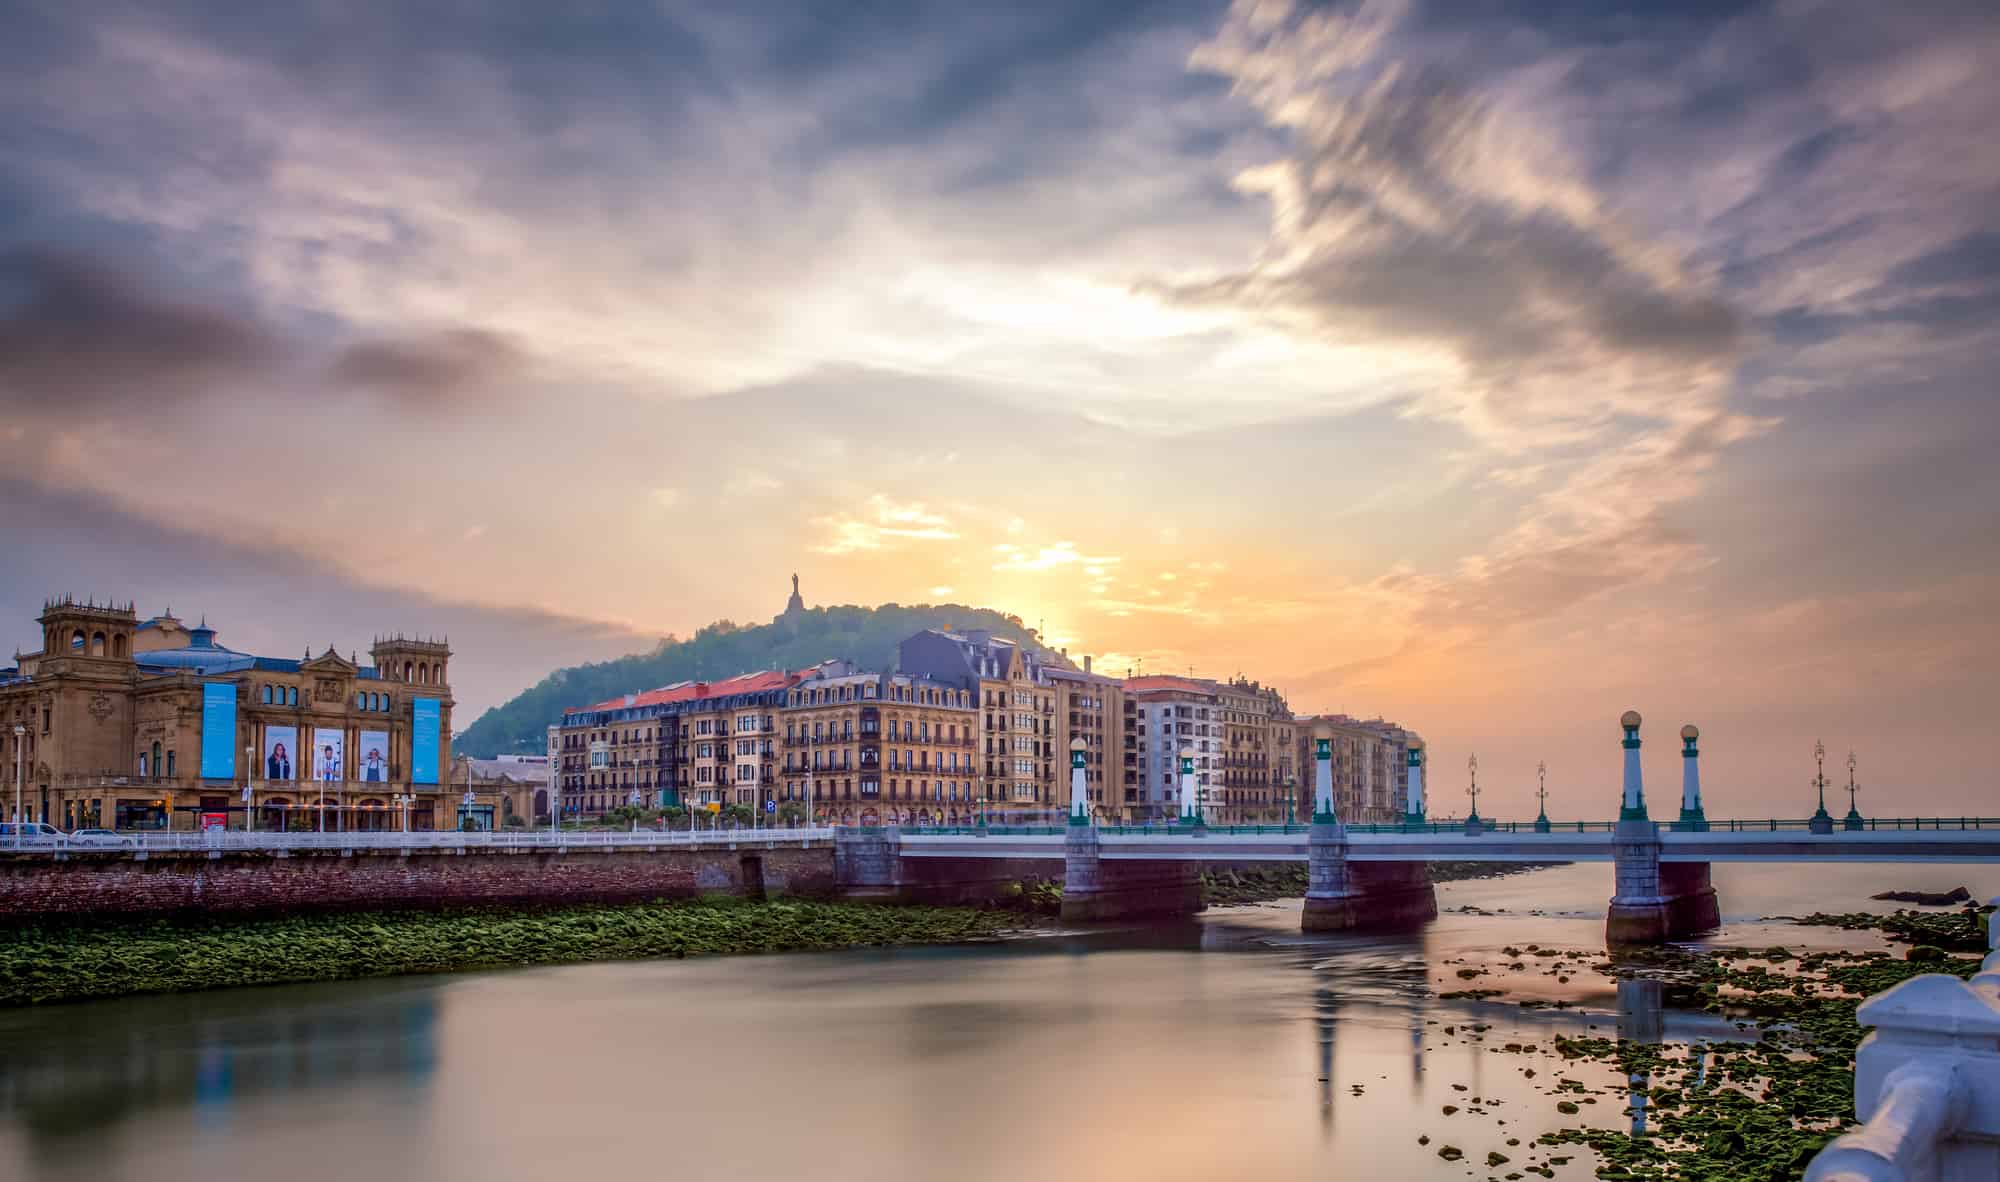 San sebastian or Donostia is a coastal city and municipality located in the Basque Autonomous Community, Spain